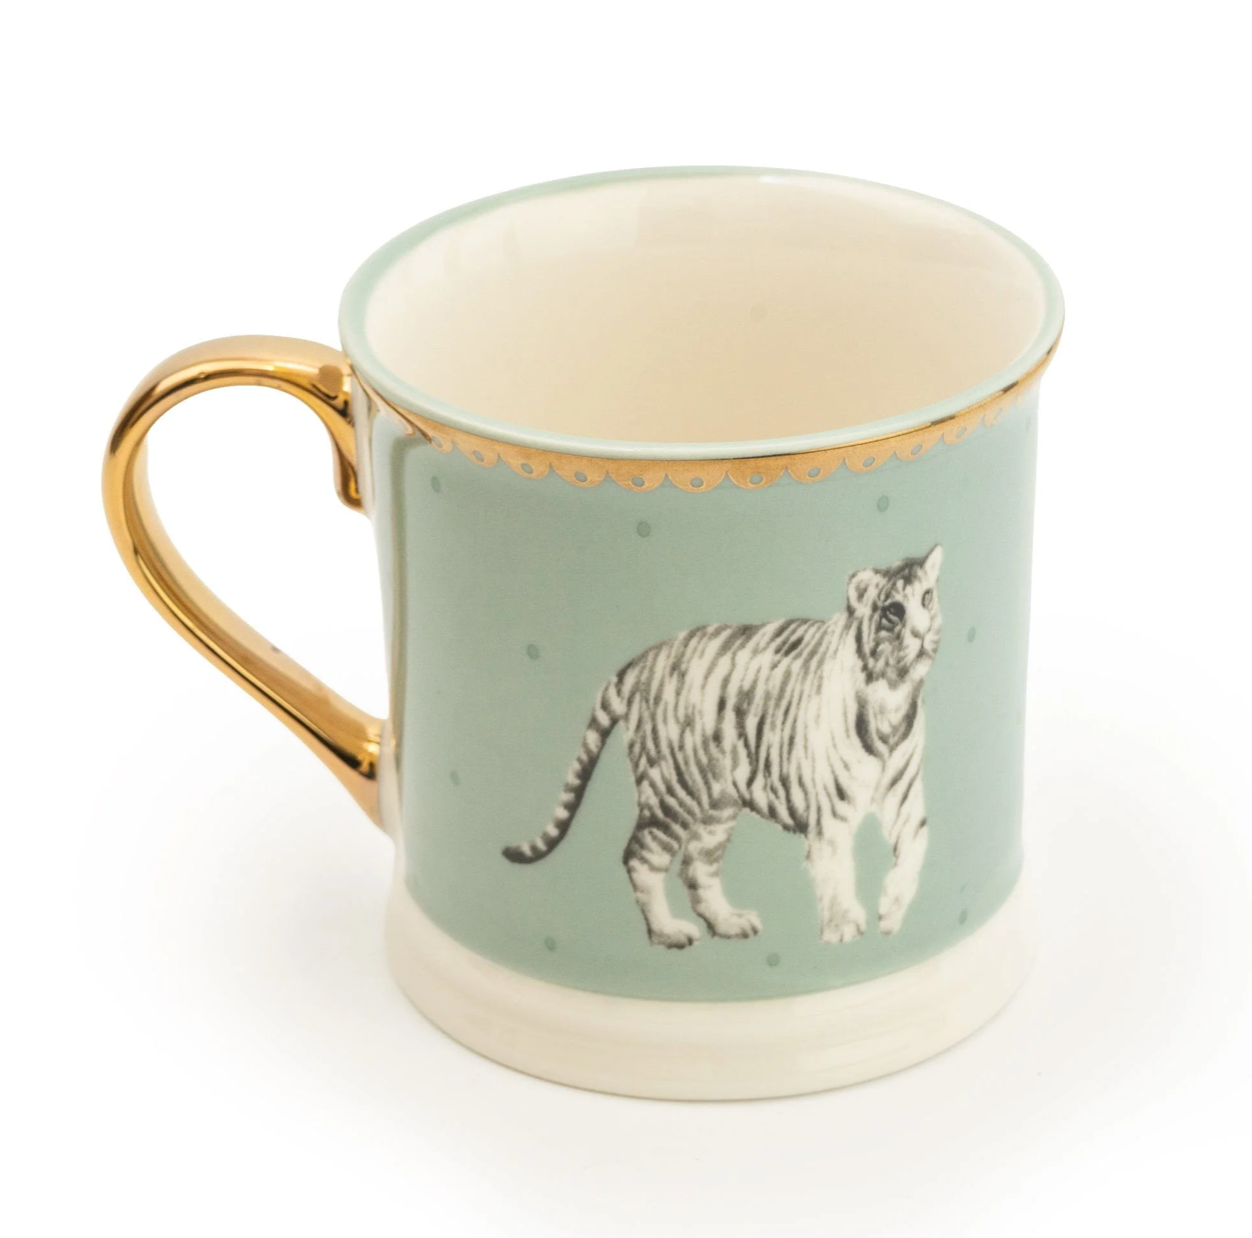 Wild Garden Tankard Porcelain Mug, Tiger